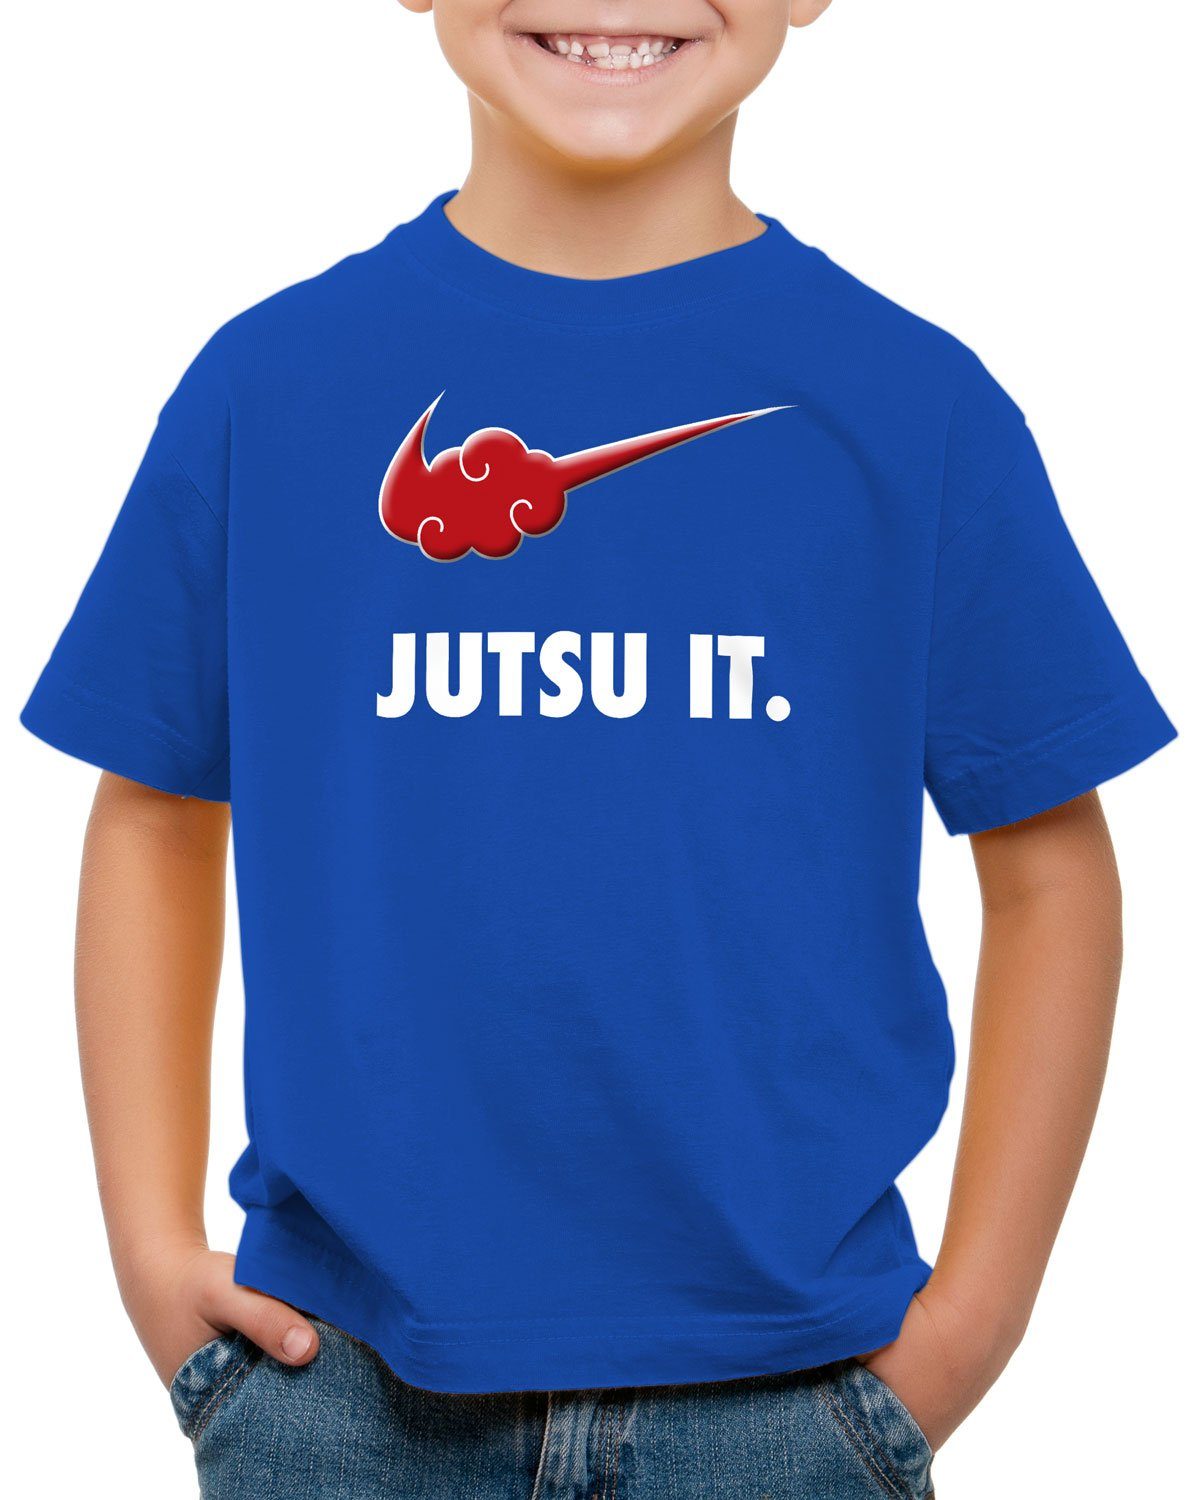 style3 Print-Shirt Kinder T-Shirt Jutsu it ninja fuchs anime manga japan blau